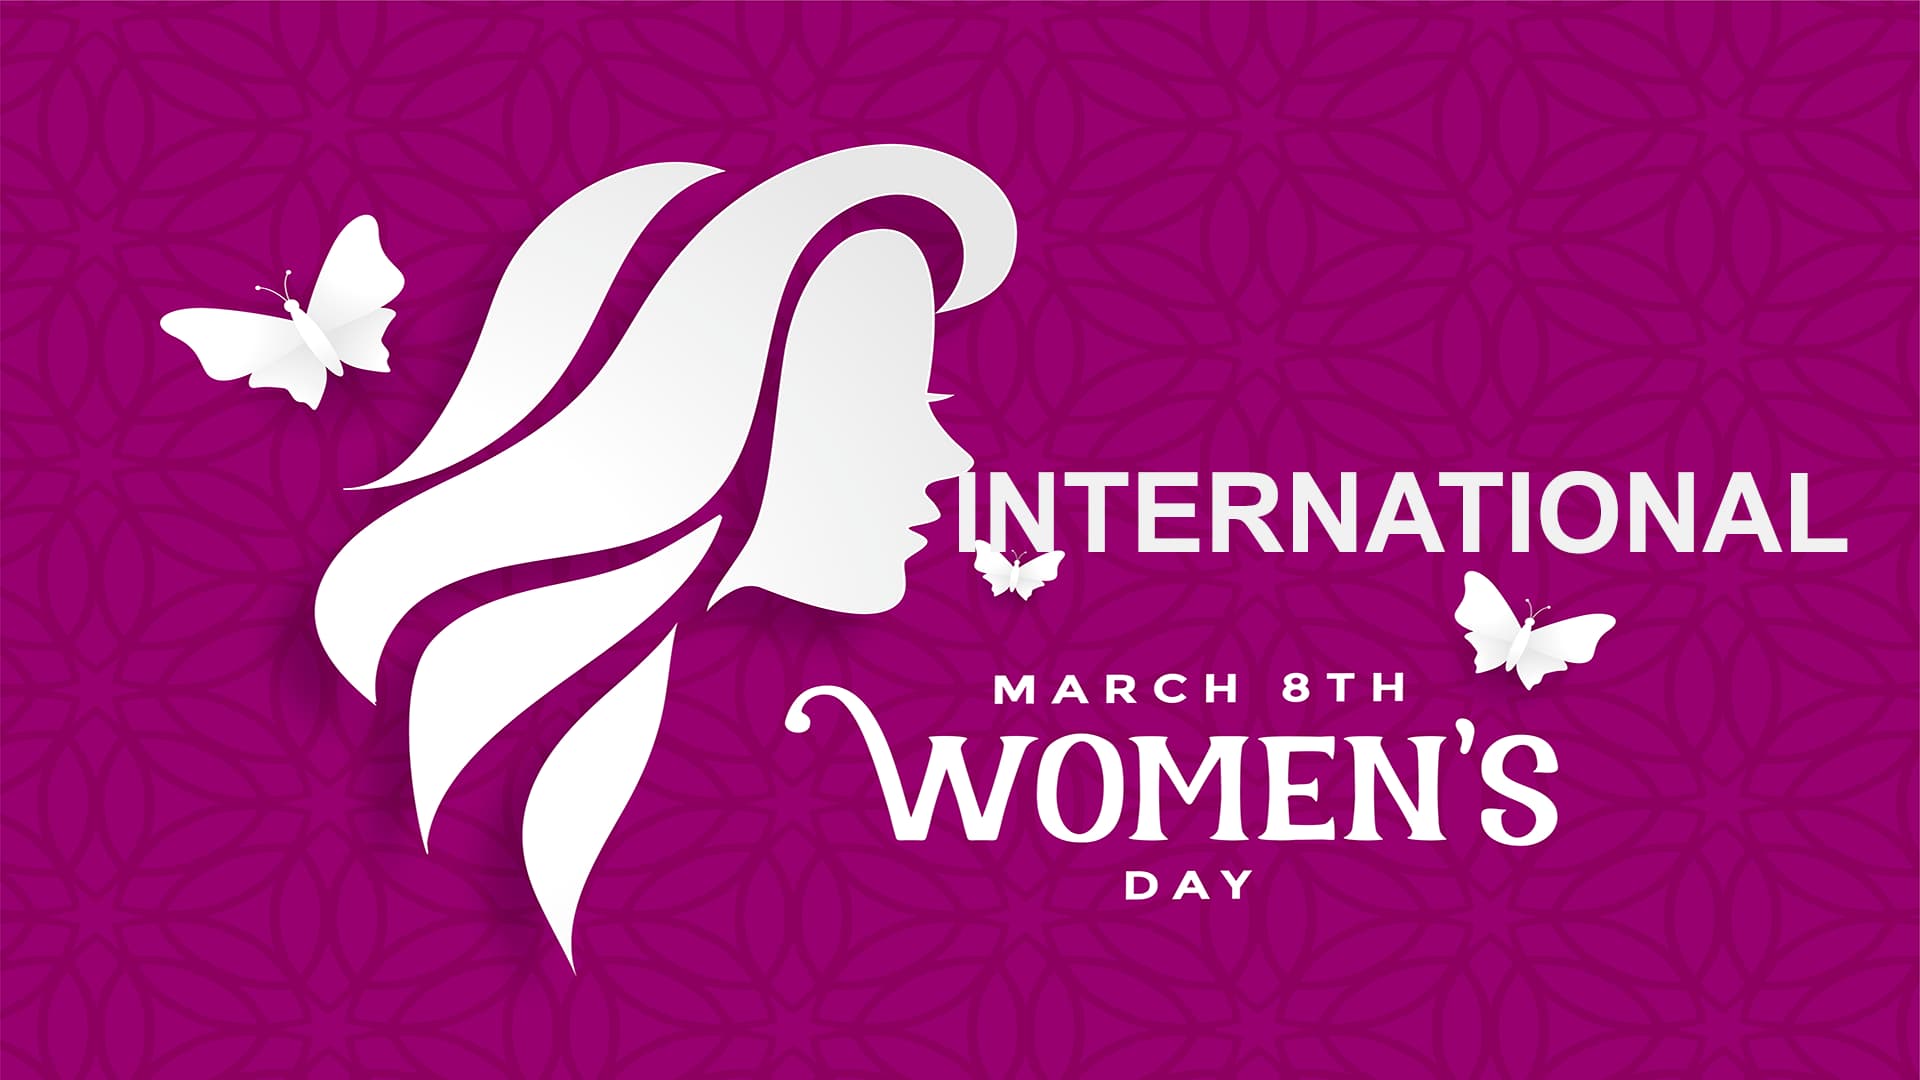 international women’s day 2021 ‘choose to challenge’